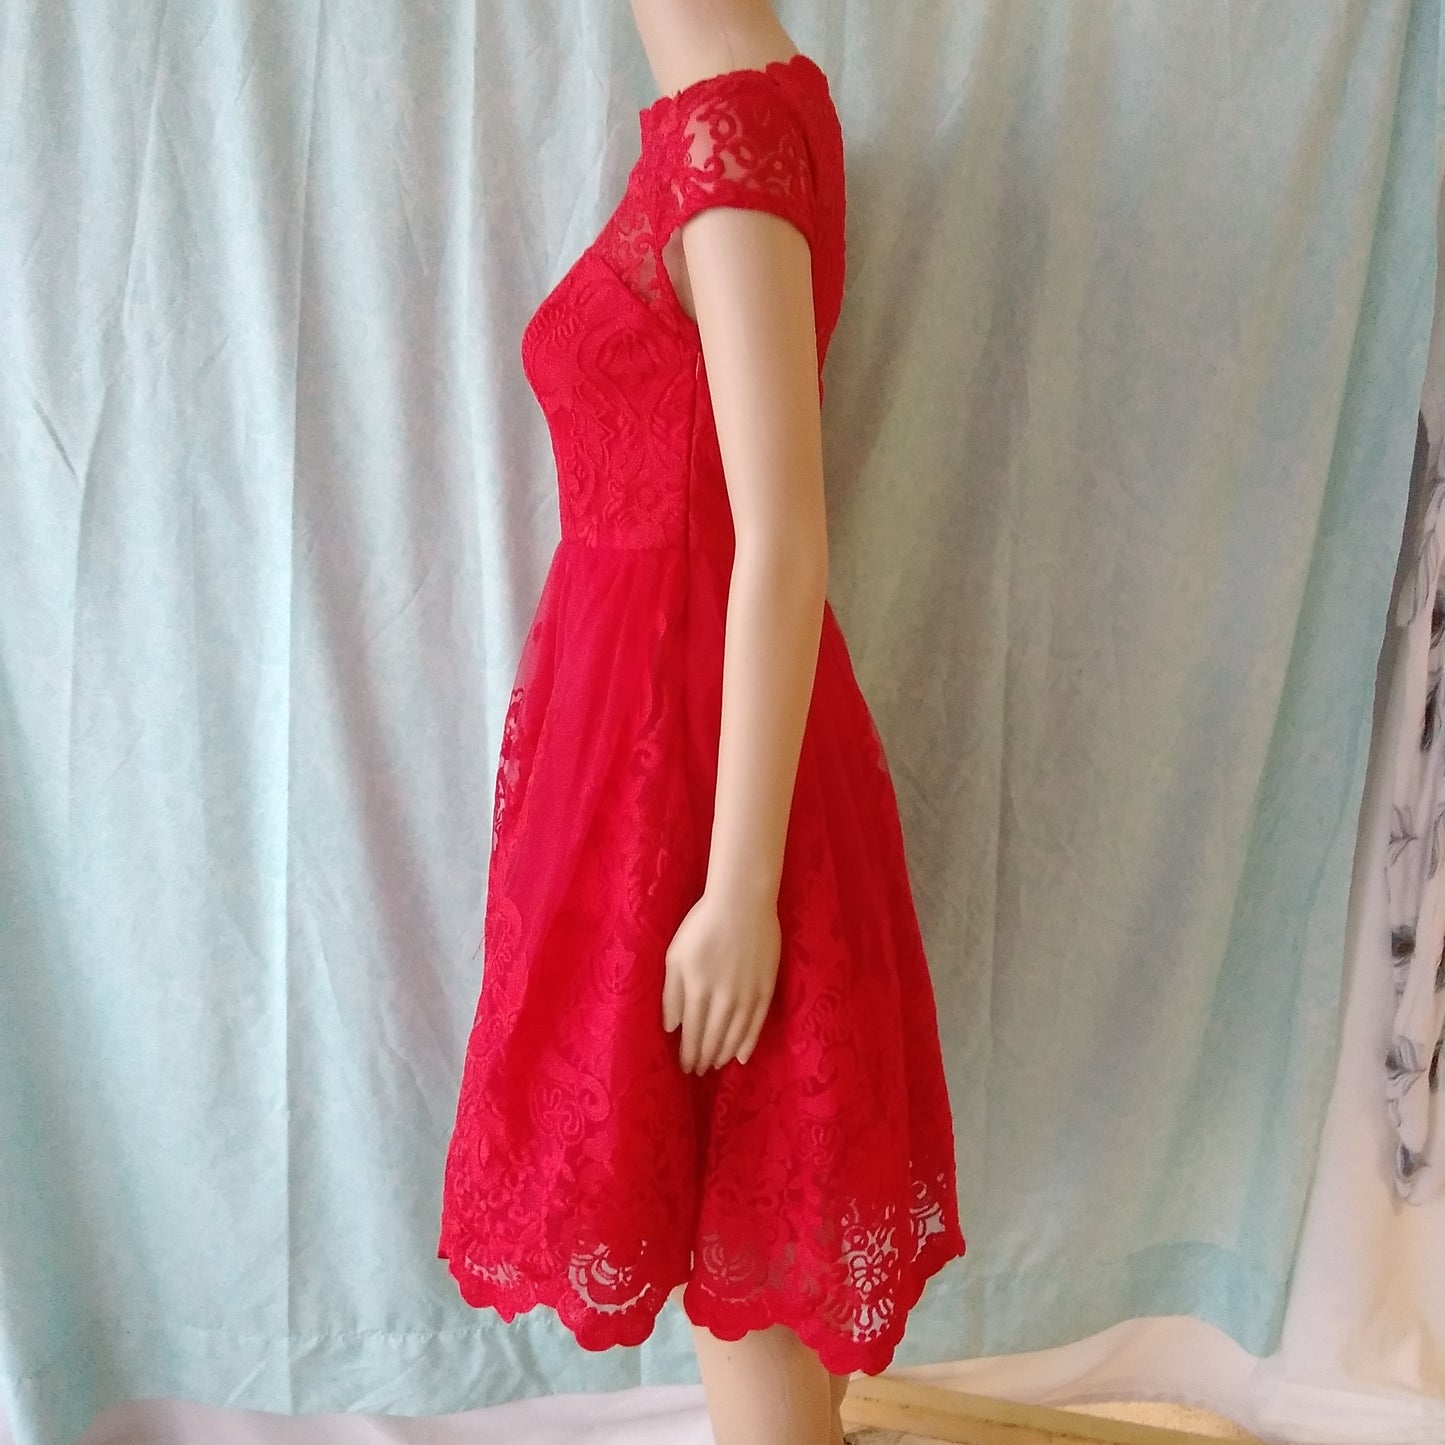 NWT - Chi Chi London Red Petite Cerise Dress - 6P